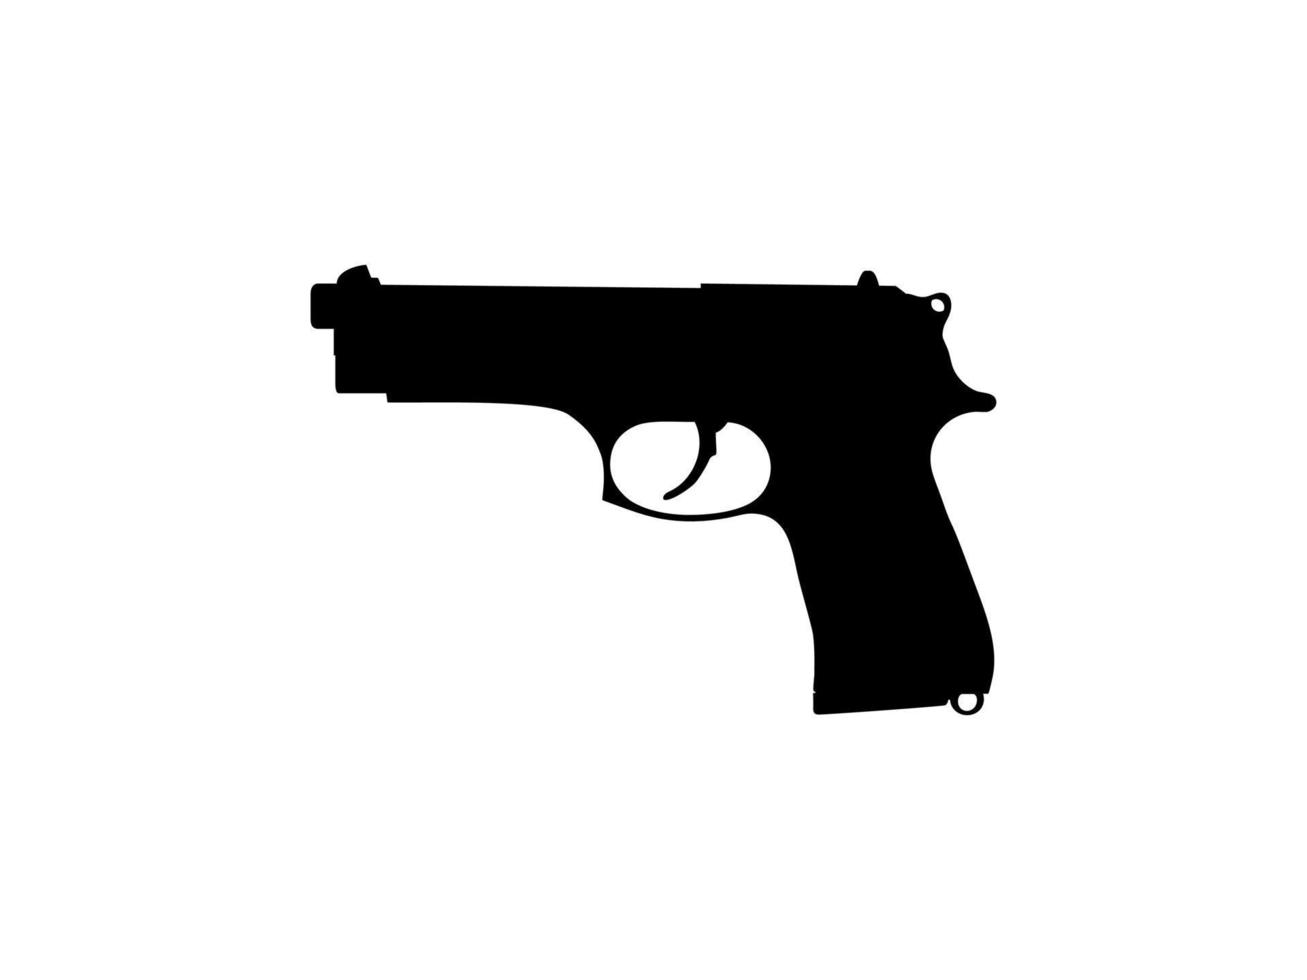 Silhouette of Gun, Pisto for Logo, Pictogram, Website or Graphic Design Element.  Vector Illustration